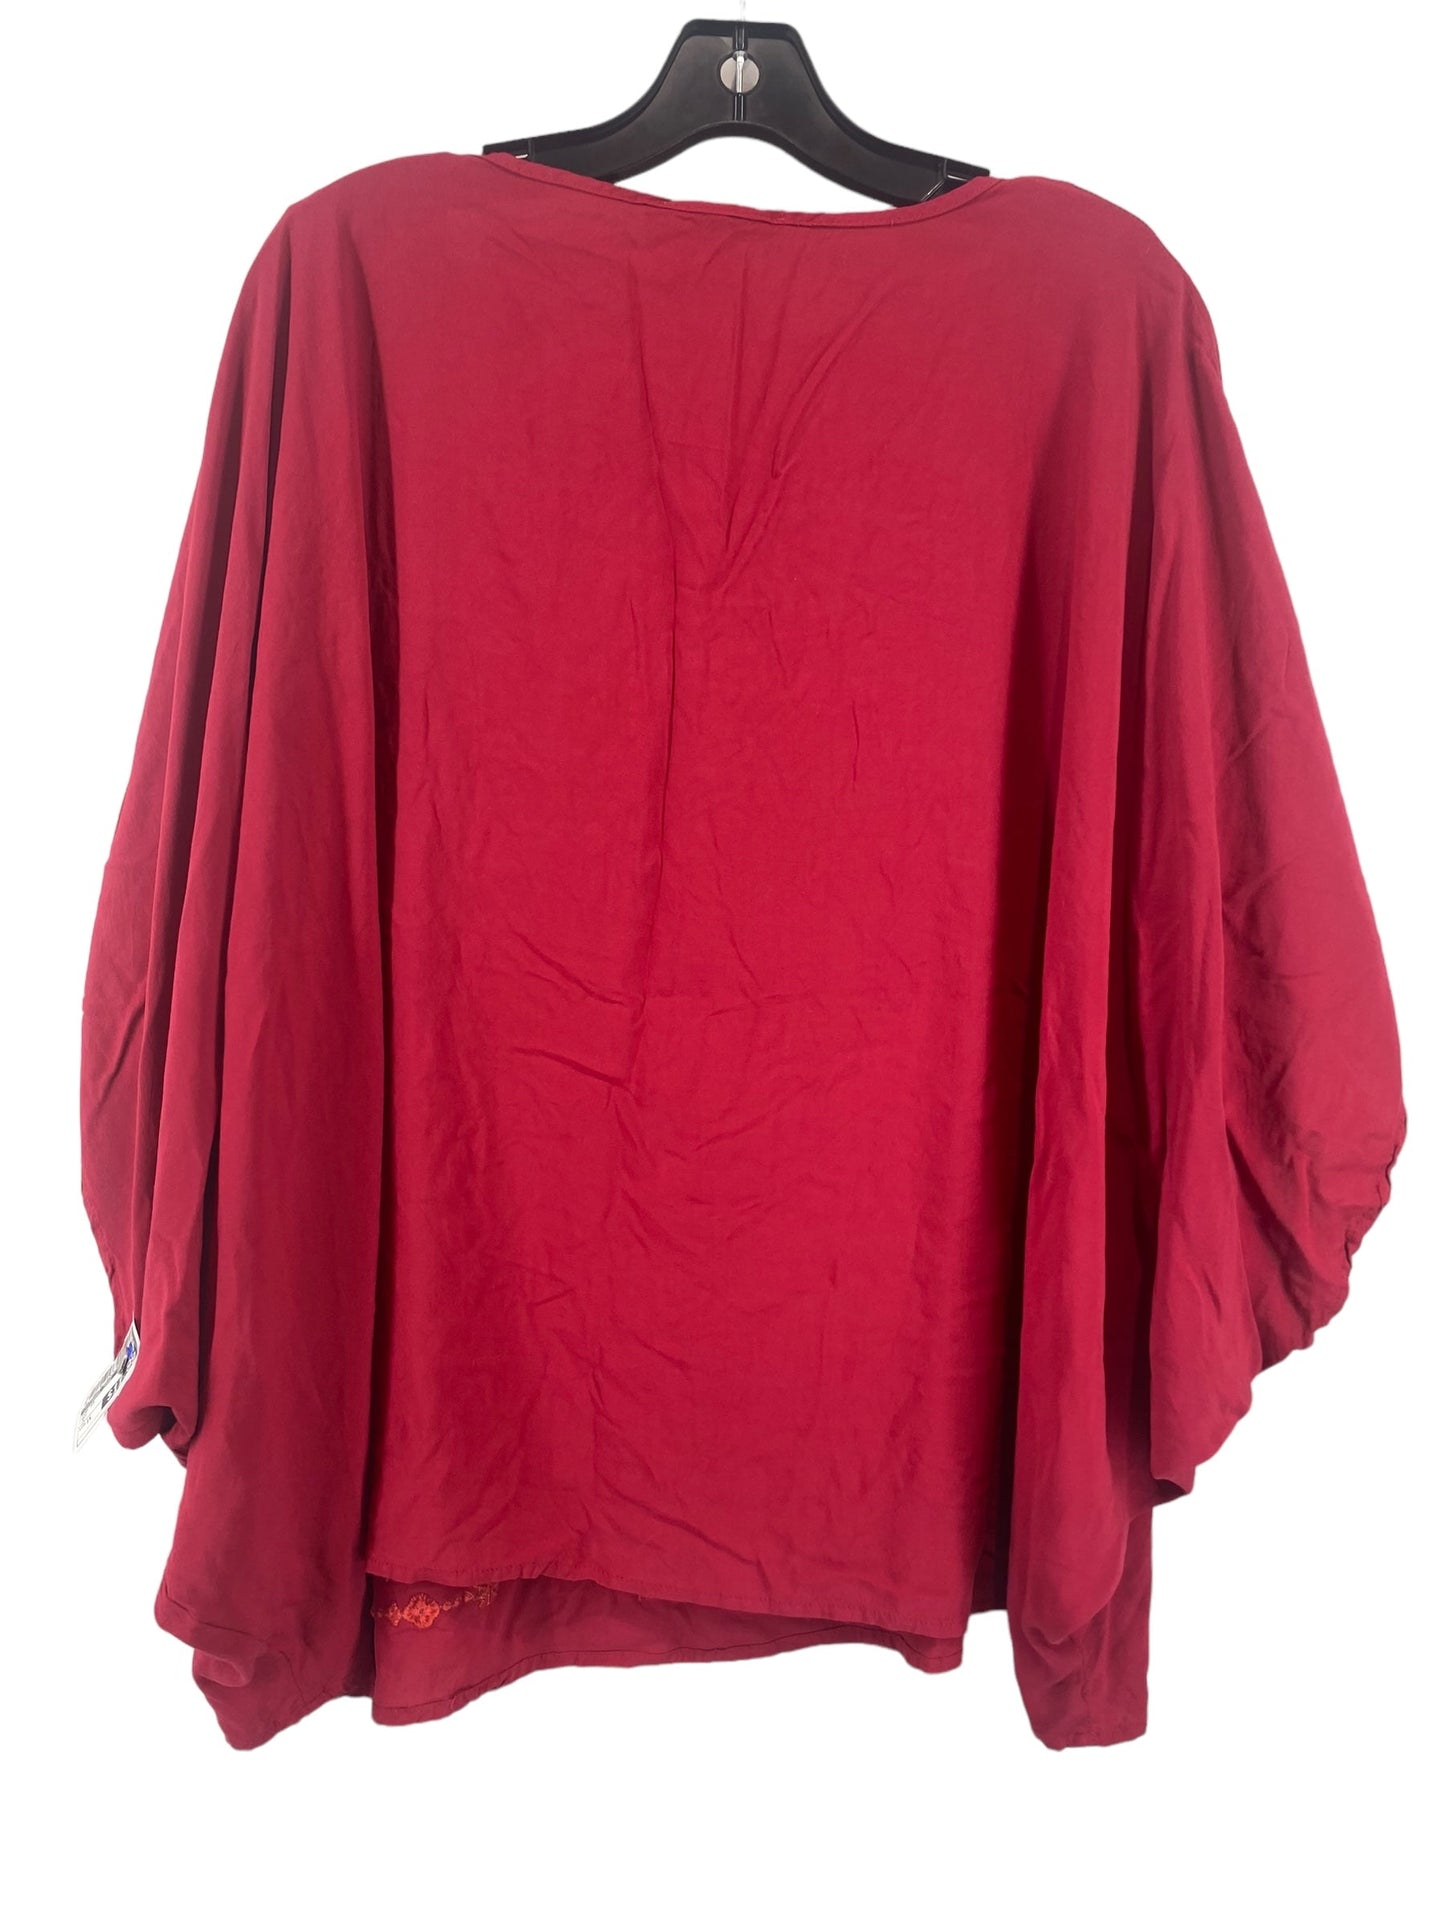 Red Top Short Sleeve Savanna Jane, Size 1x